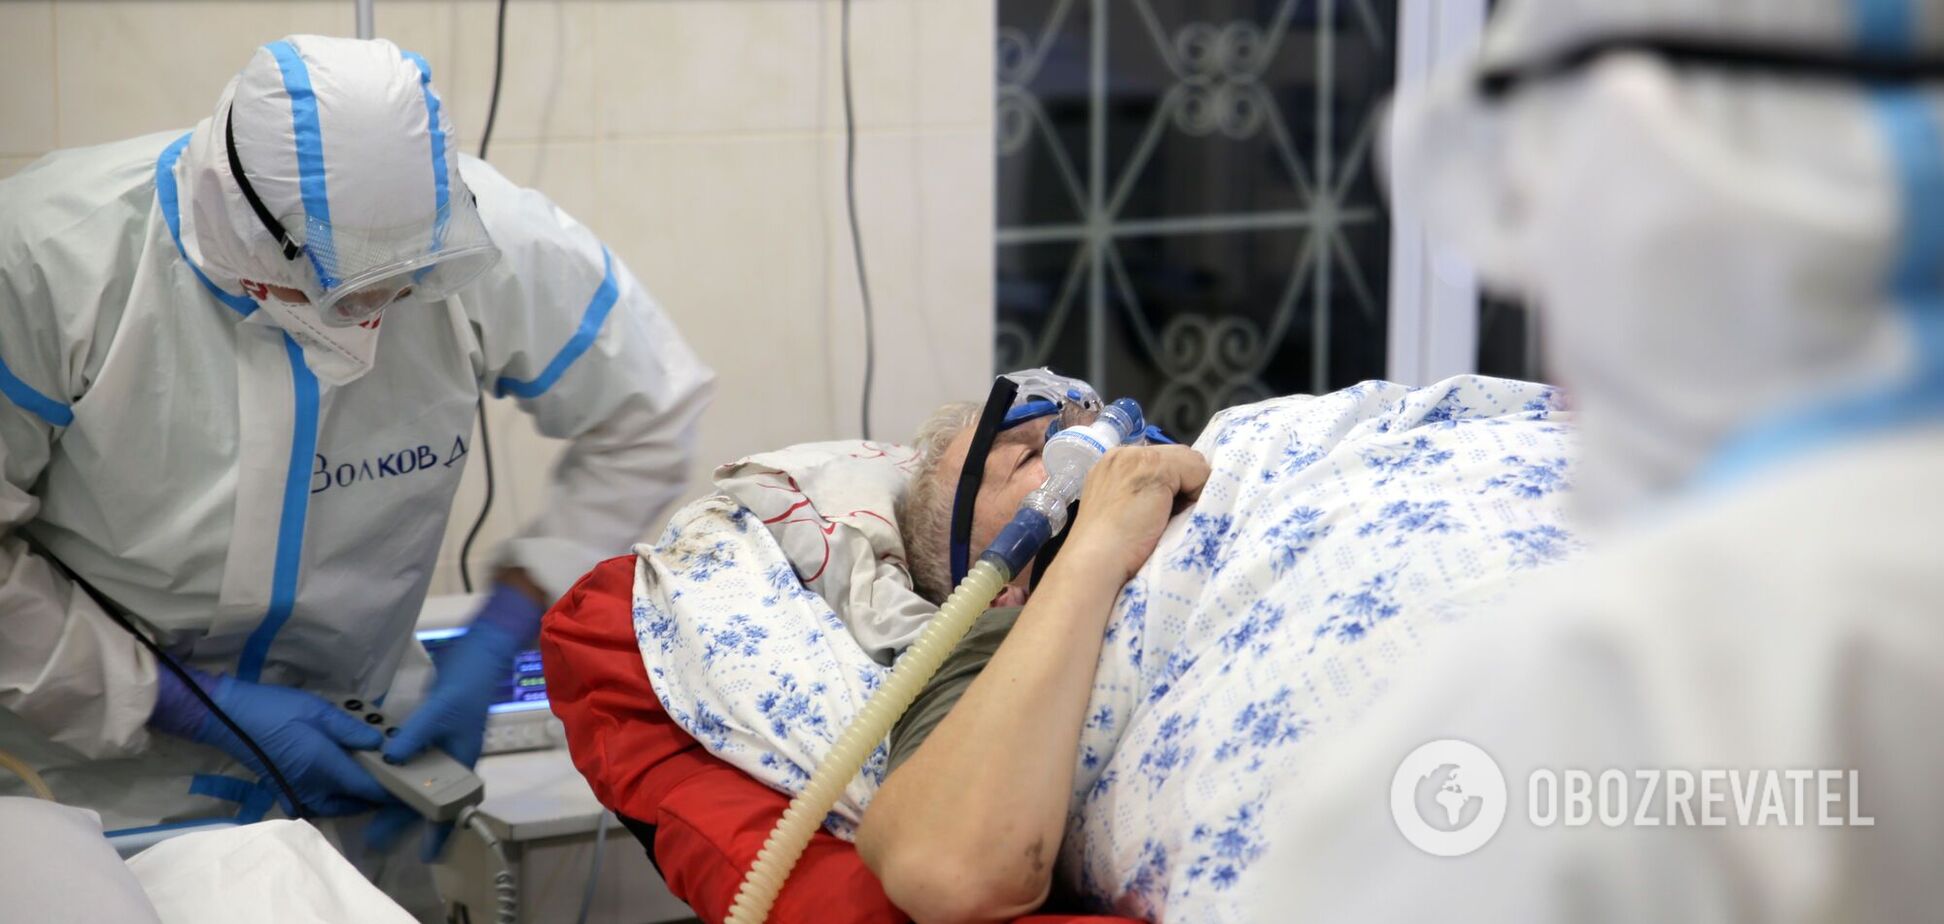 В Одессе пациентам с COVID-19 критически не хватает кислорода и денег на лекарства, – волонтер